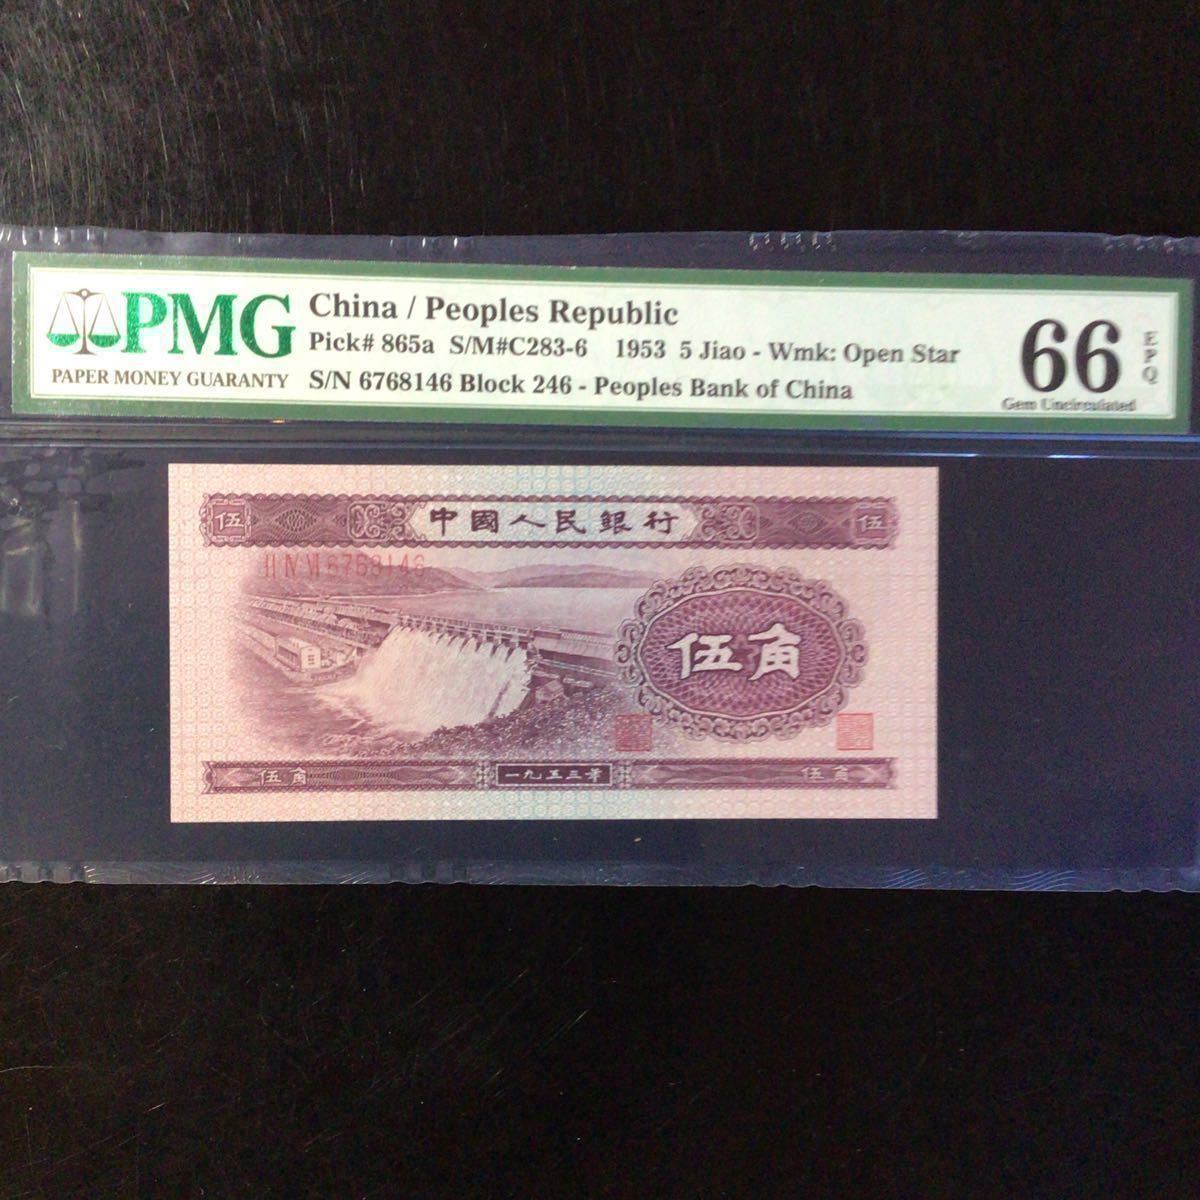 World Banknote Grading CHINA《People's Republic》5 Jiao【1953】『PMG Grading Gem Uncirculated 66 EPQ』